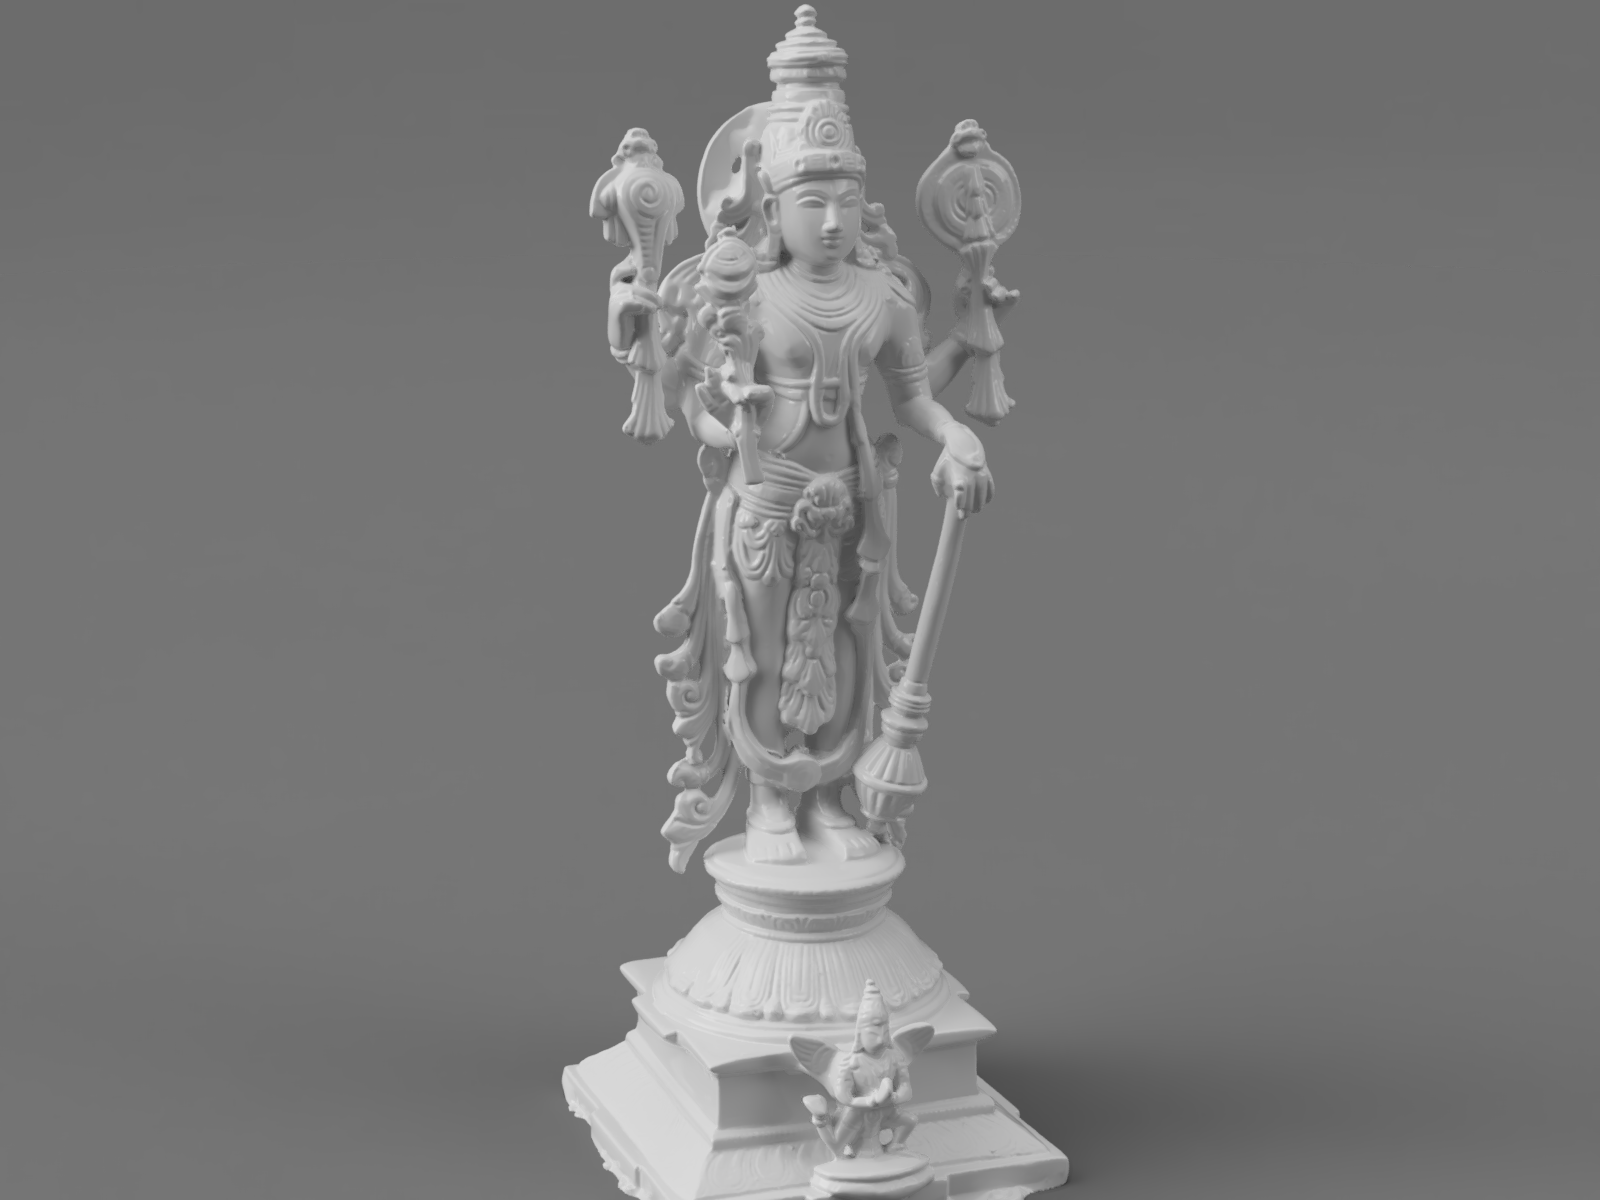 Vishnu the Preserver with Garuda (eagle) - Chola bronze style